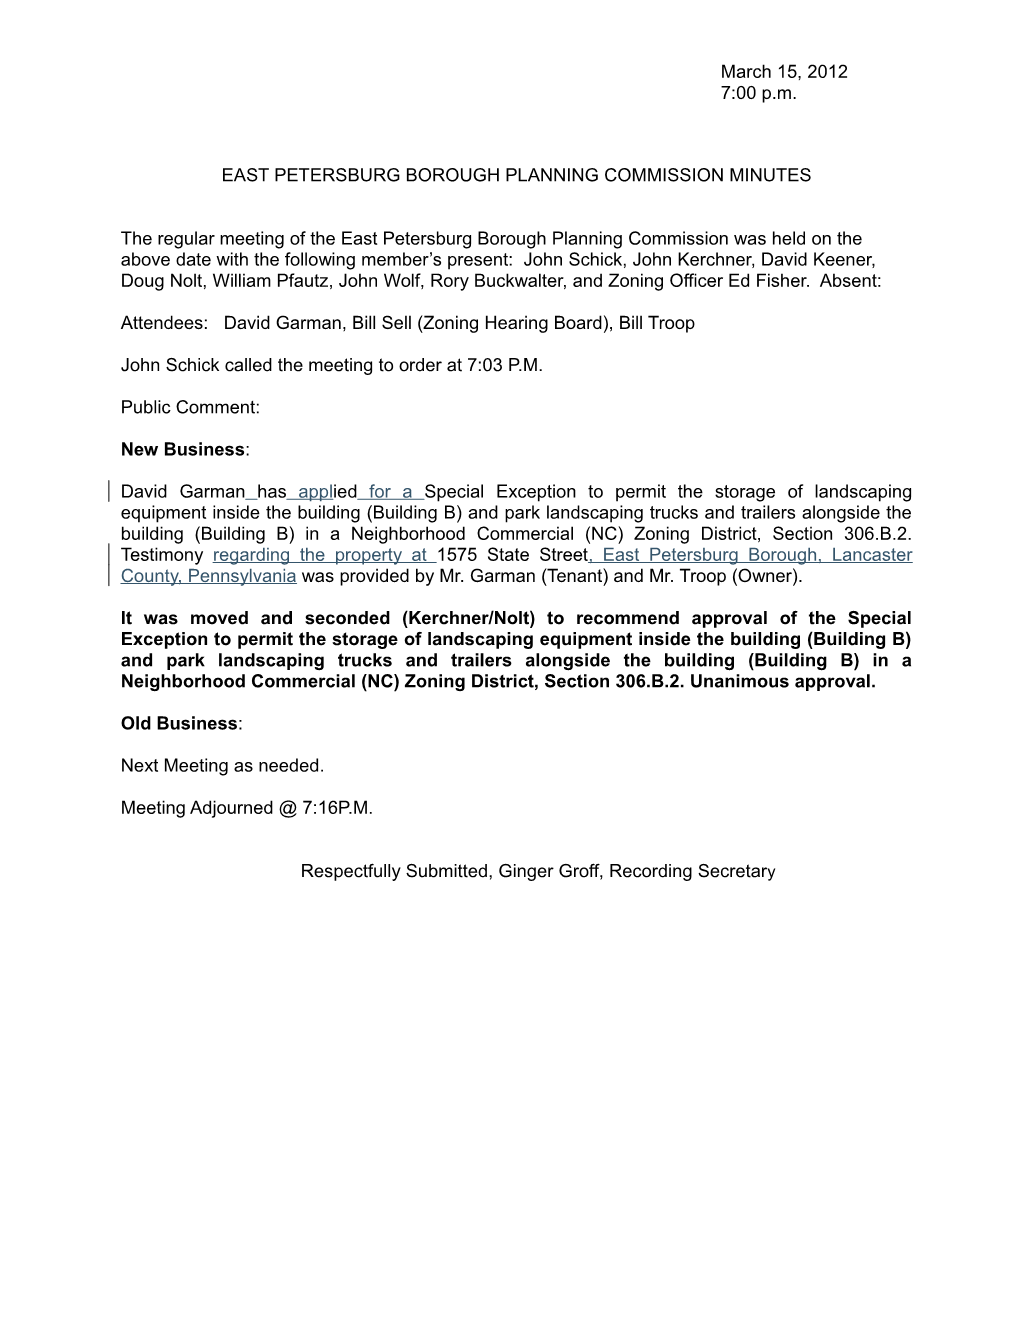 East Petersburg Borough Planning Commission Minutes